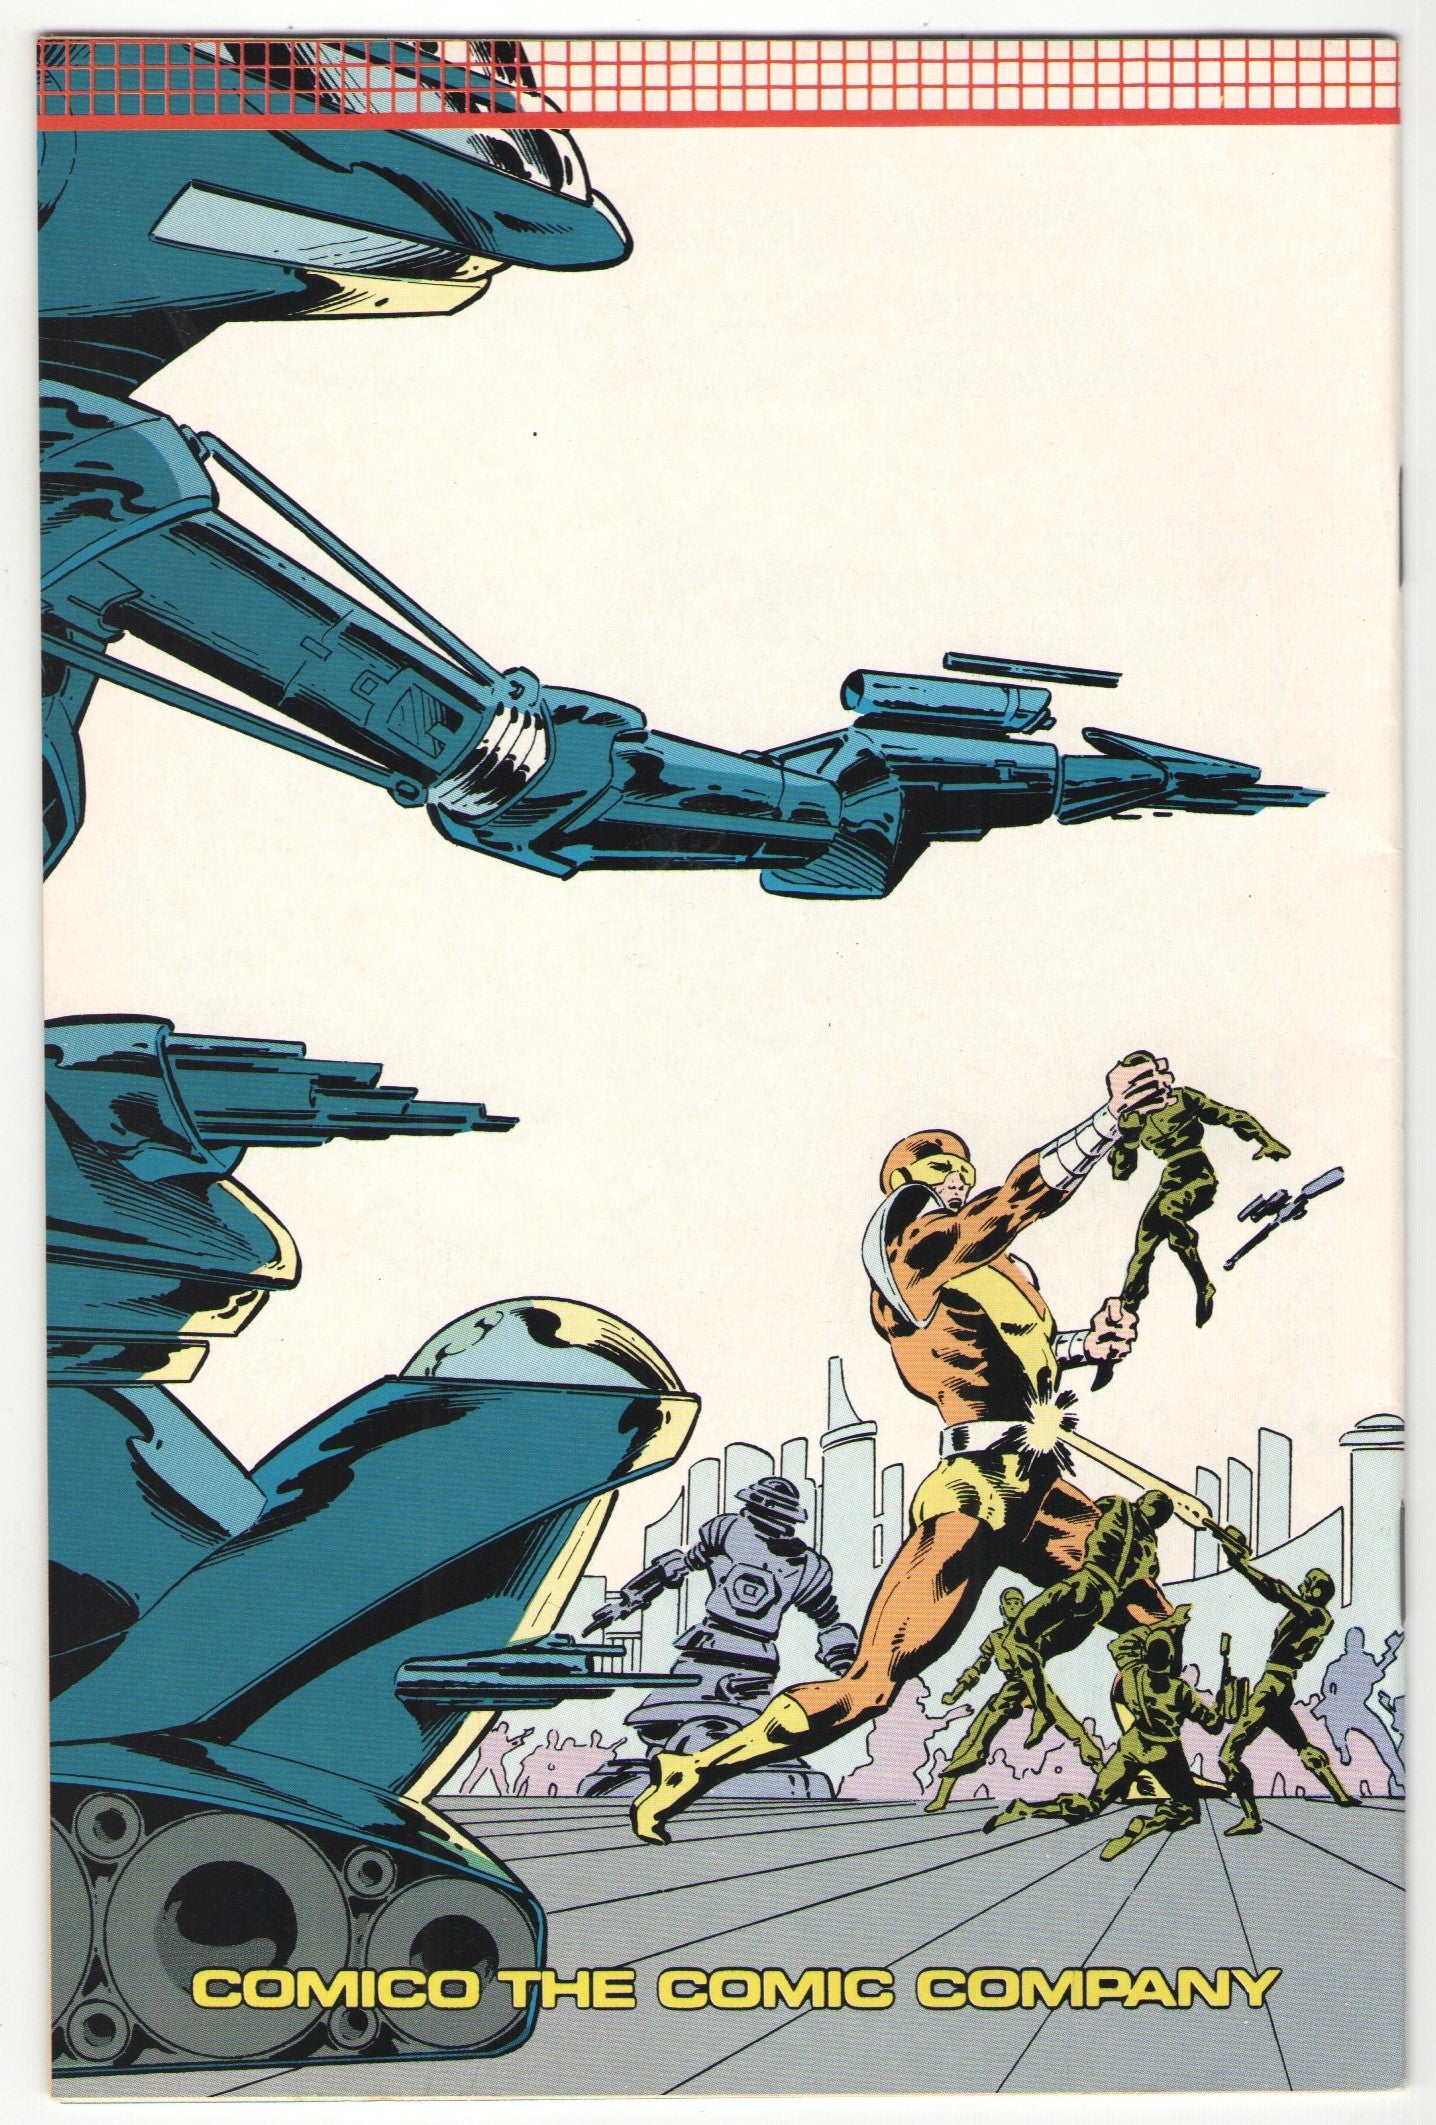 Justice Machine #7 (1987)